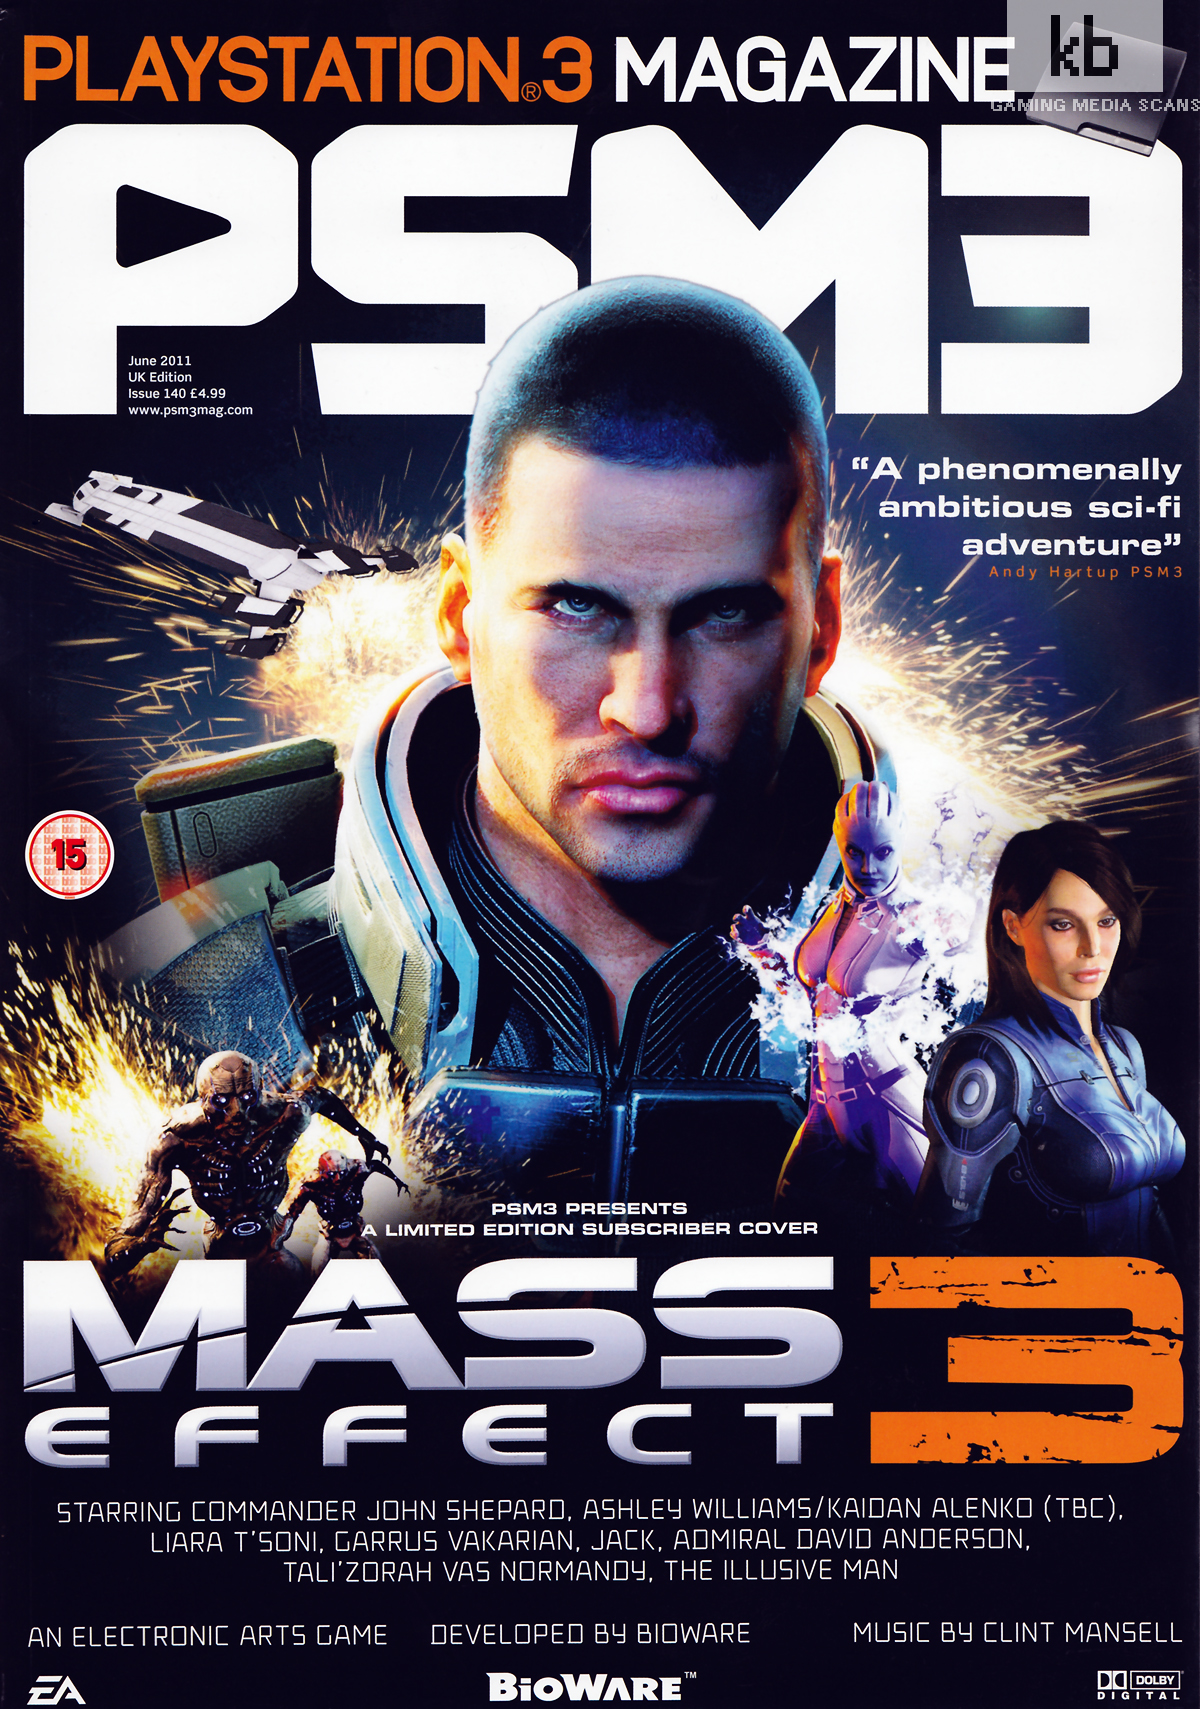 Massive Info Untuk Mass Effect 3!